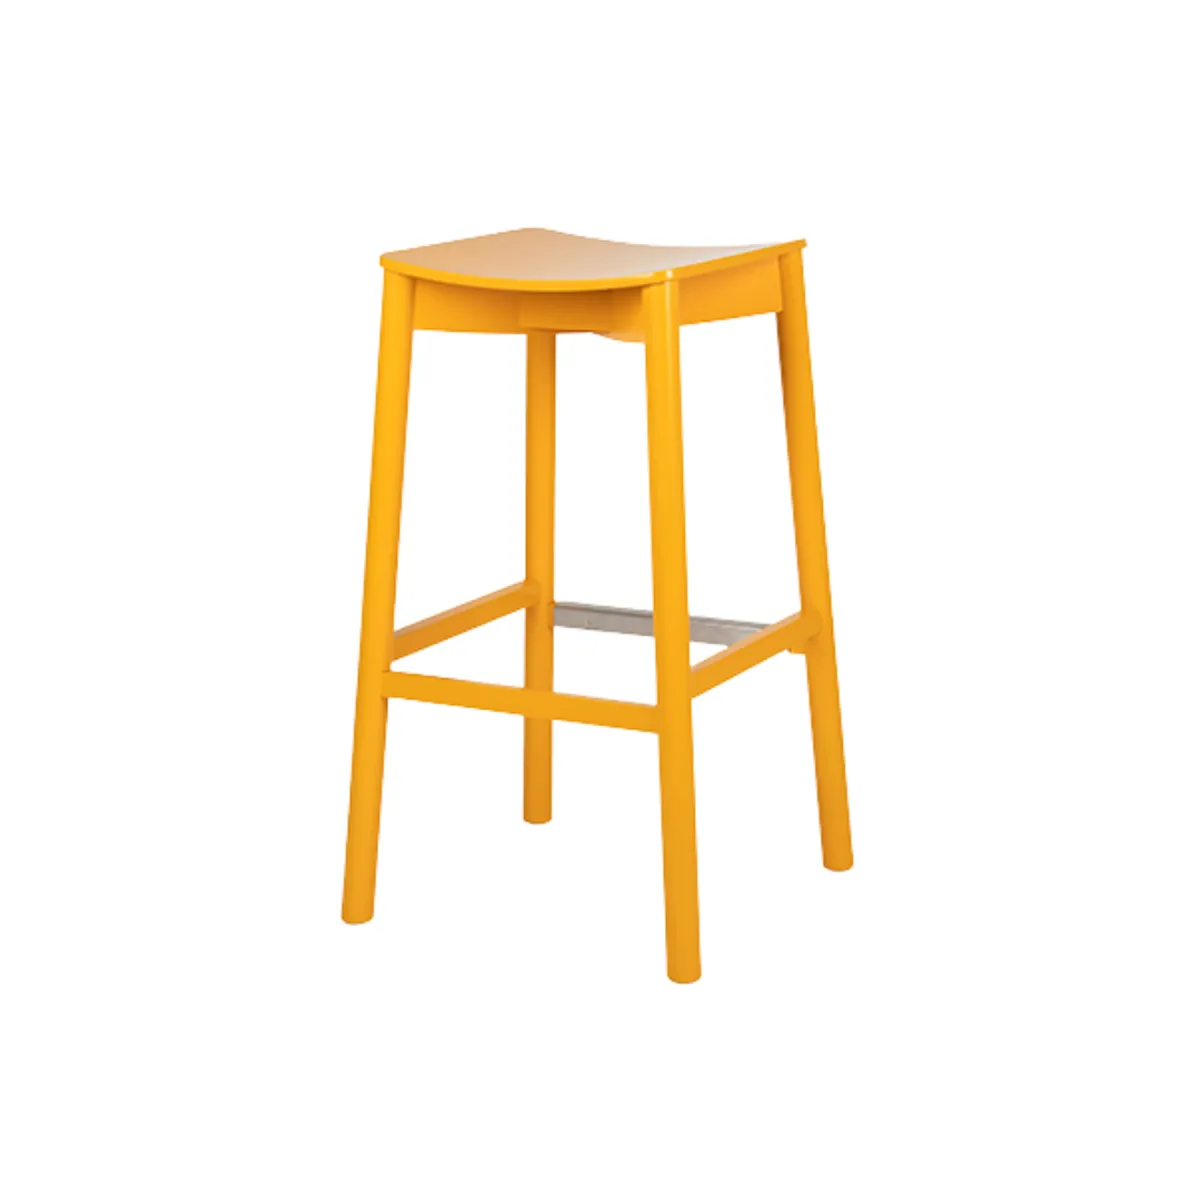 Perch high stool 2